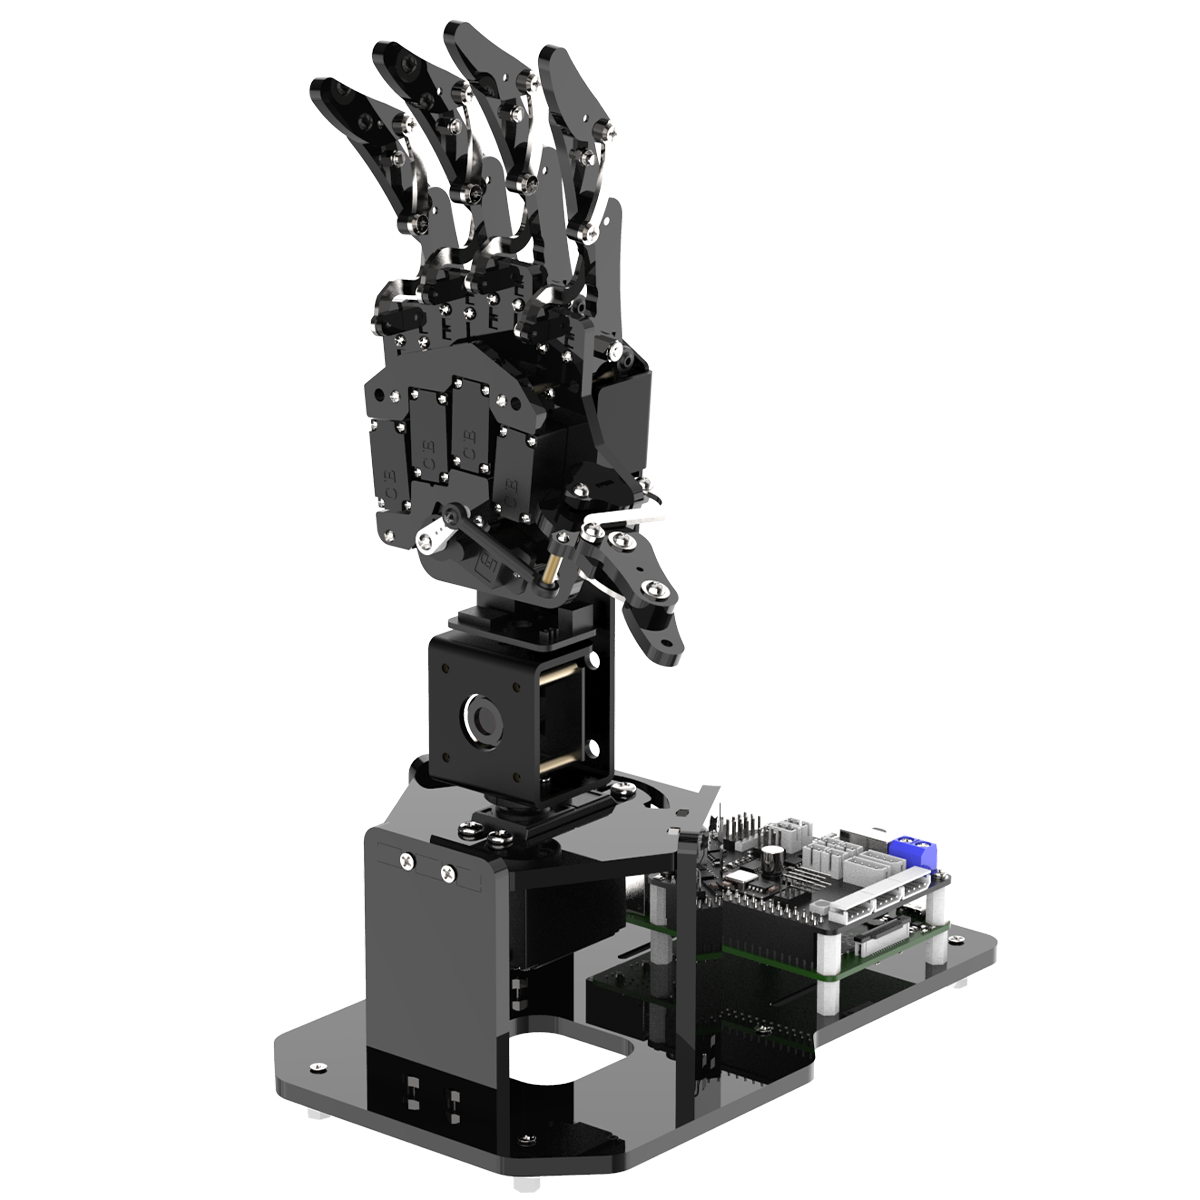 Hiwonder uHandPi Raspberry Pi Robotic Hand AI Vision Python Programming